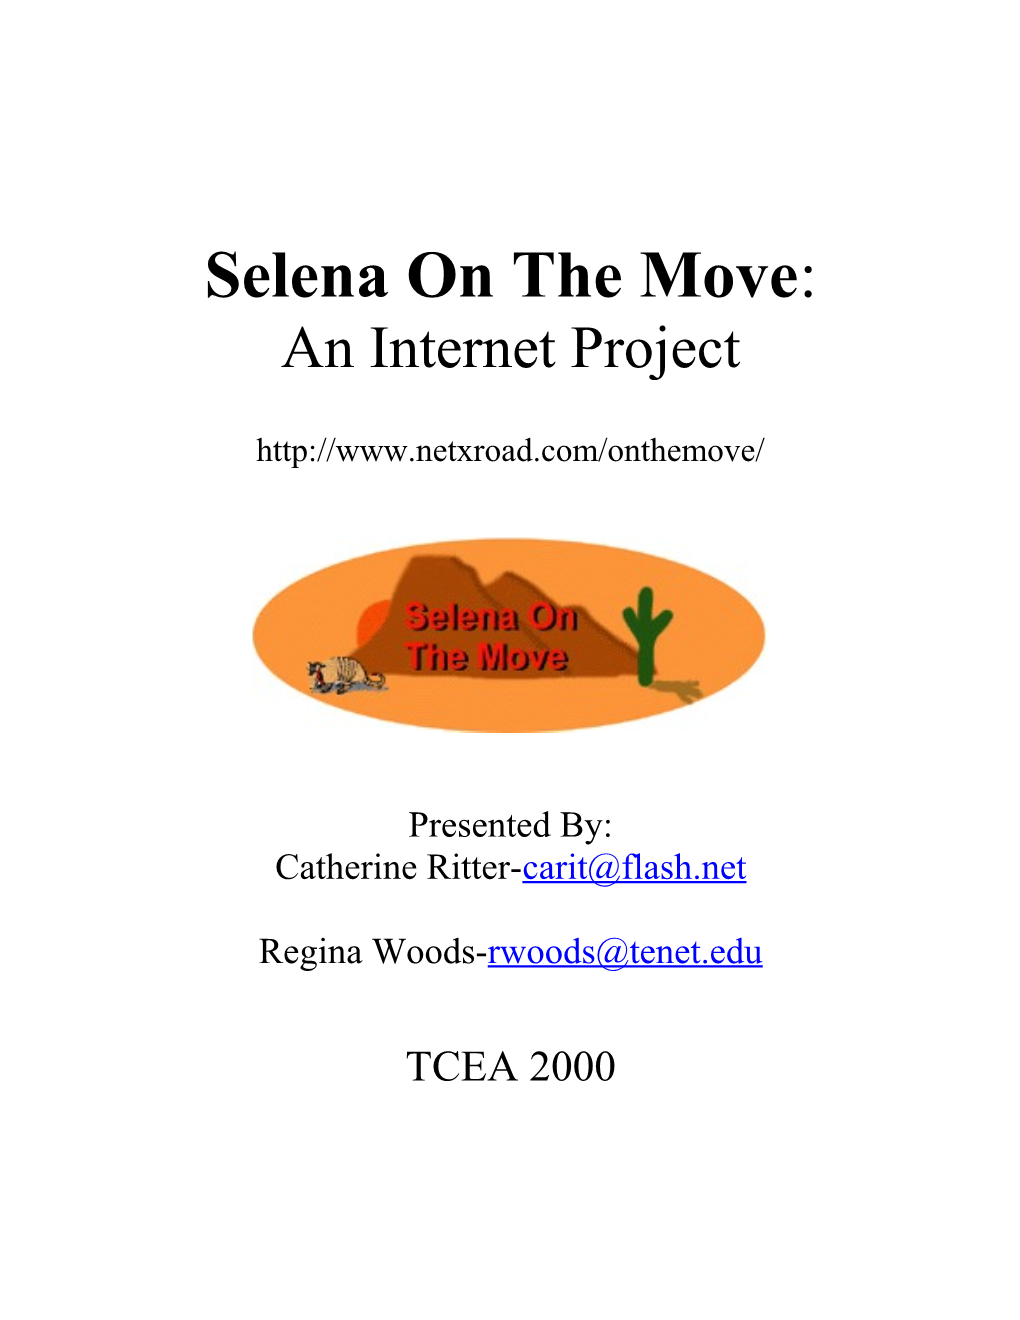 Selena on the Move